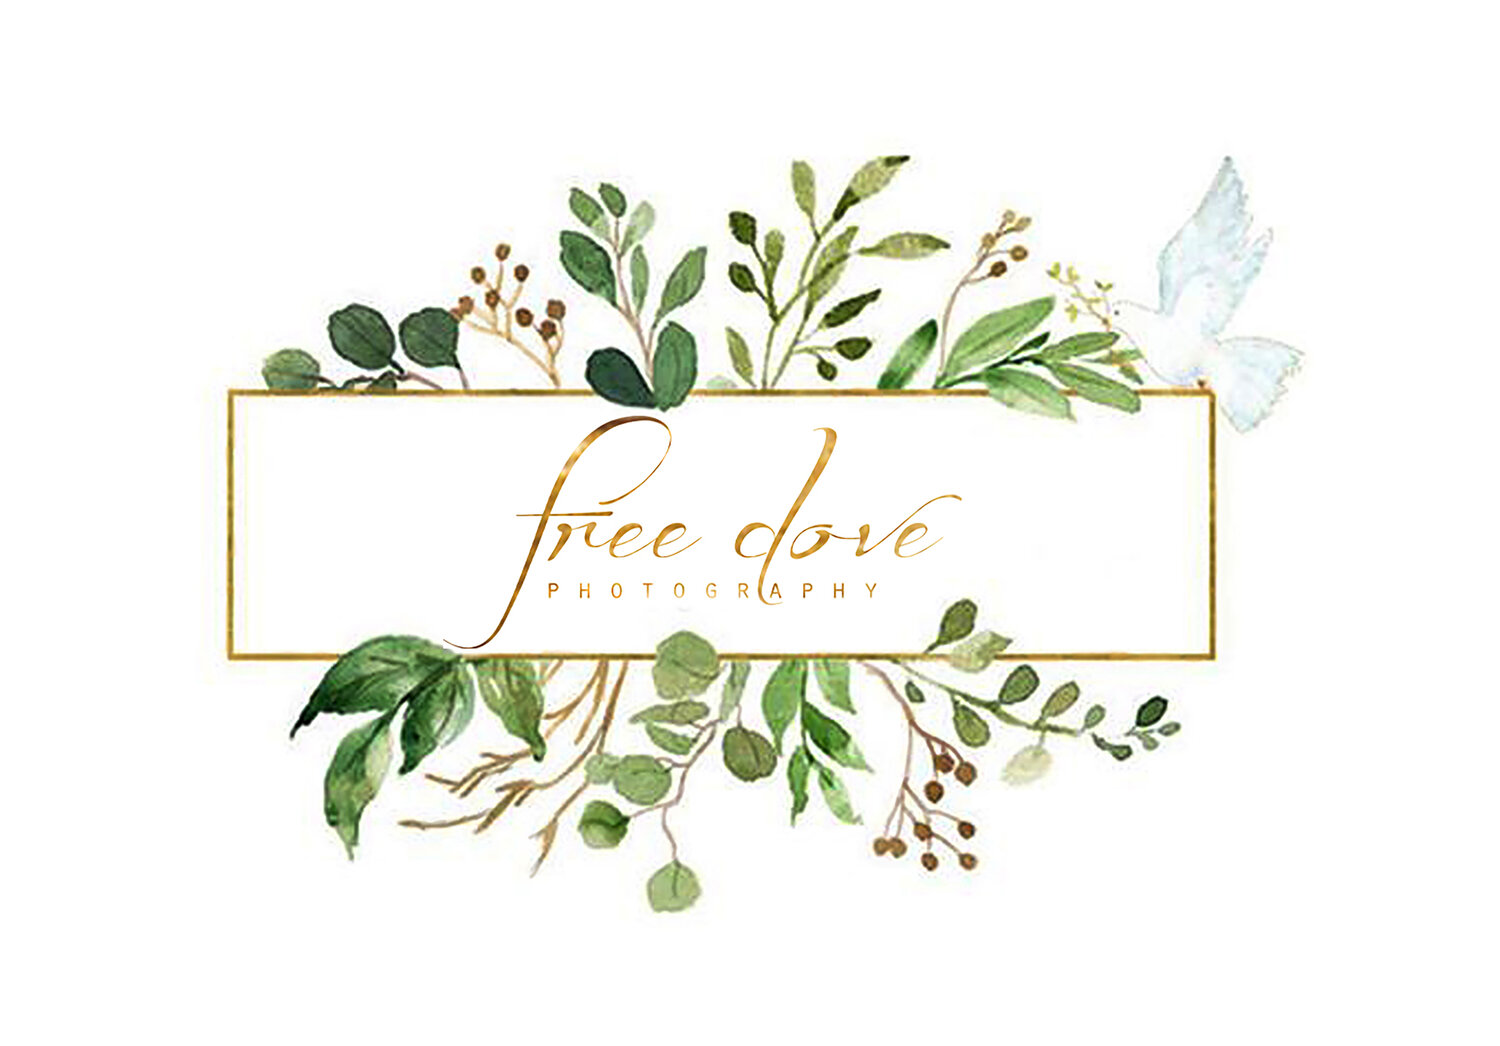 Free Dove Photography